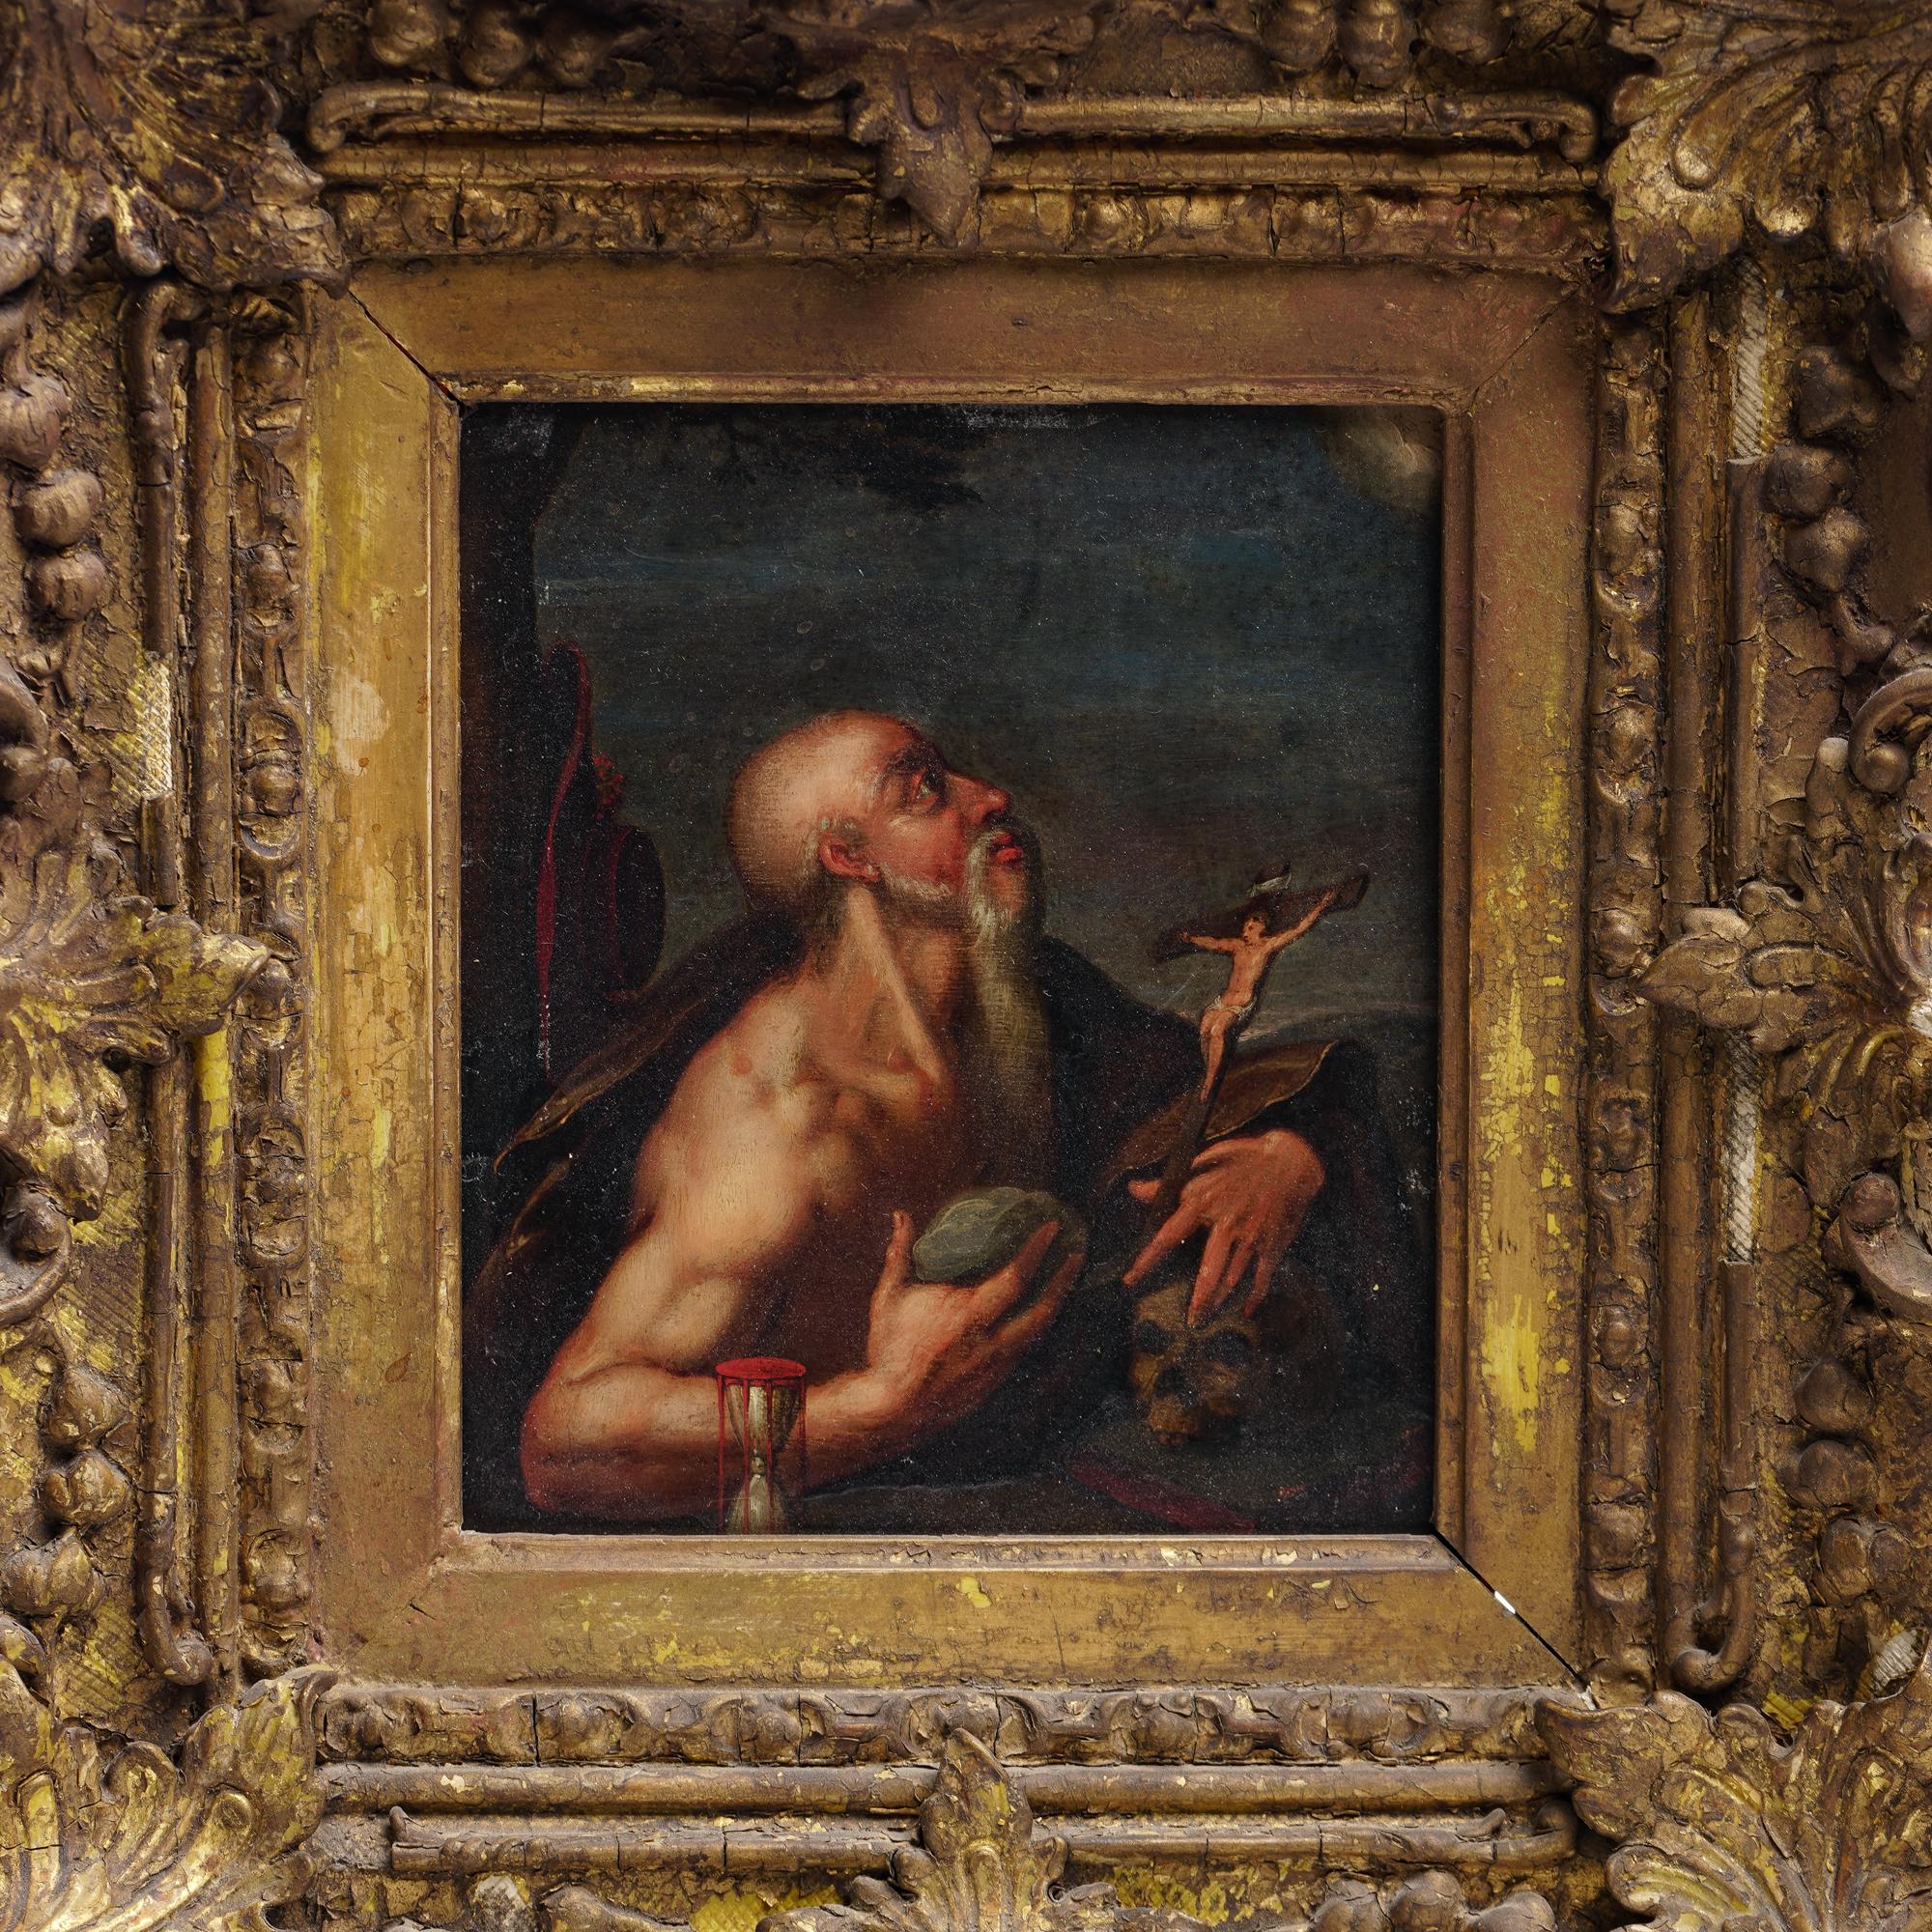 European 17th century oil on copper portrait - St. Jerome For Sale